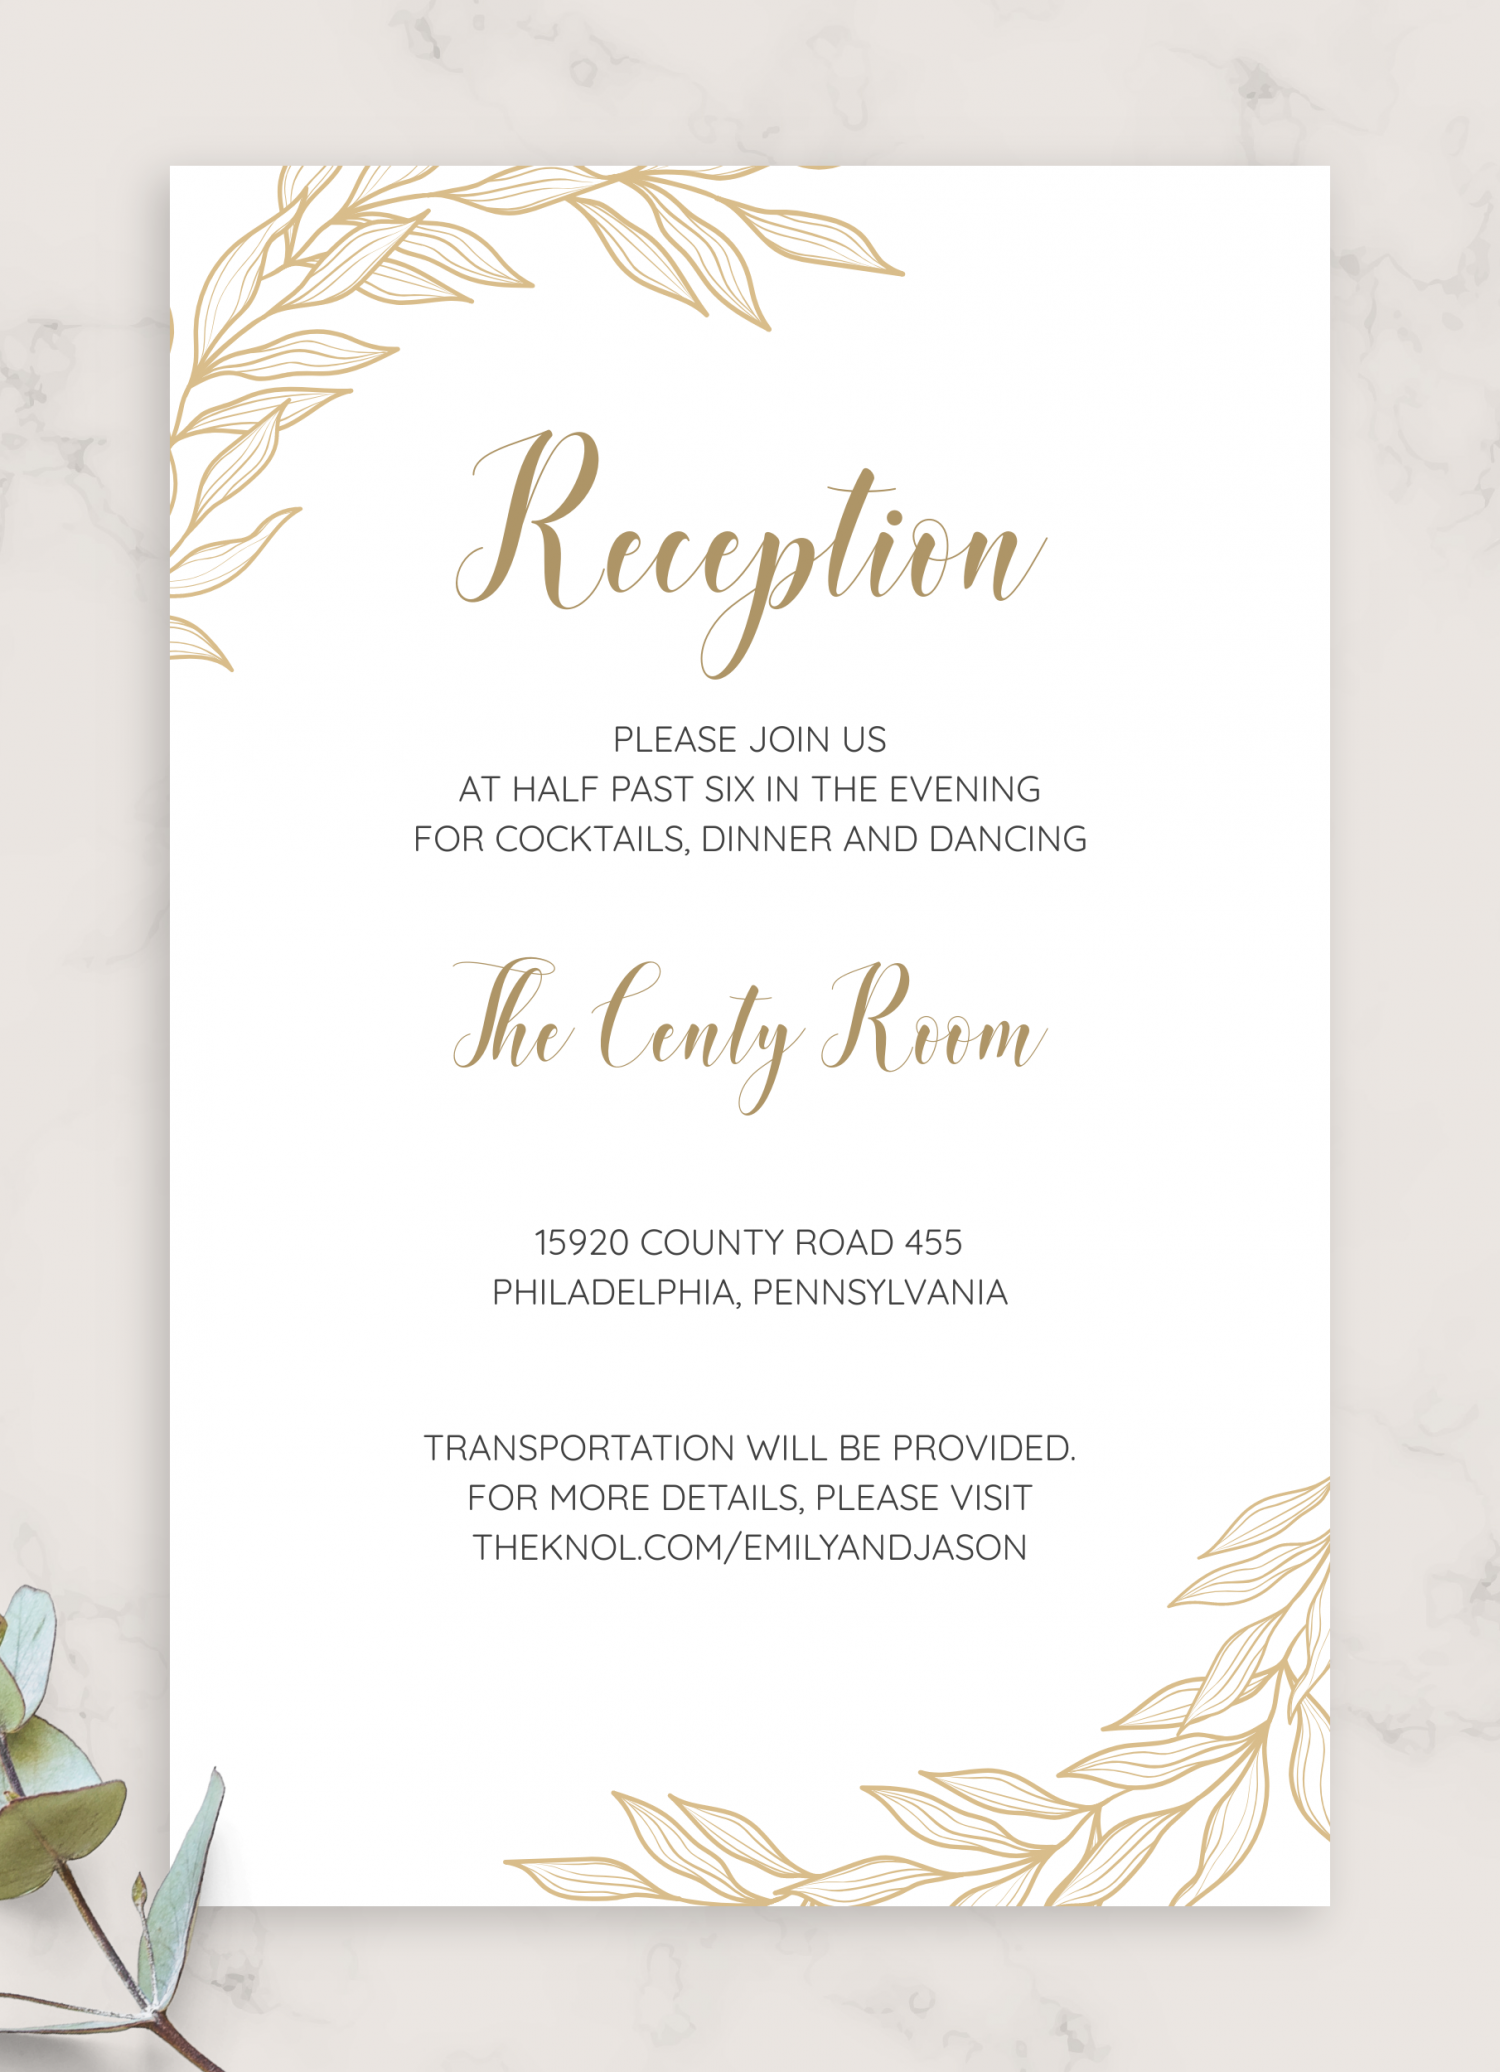 printable-wedding-invitation-templates